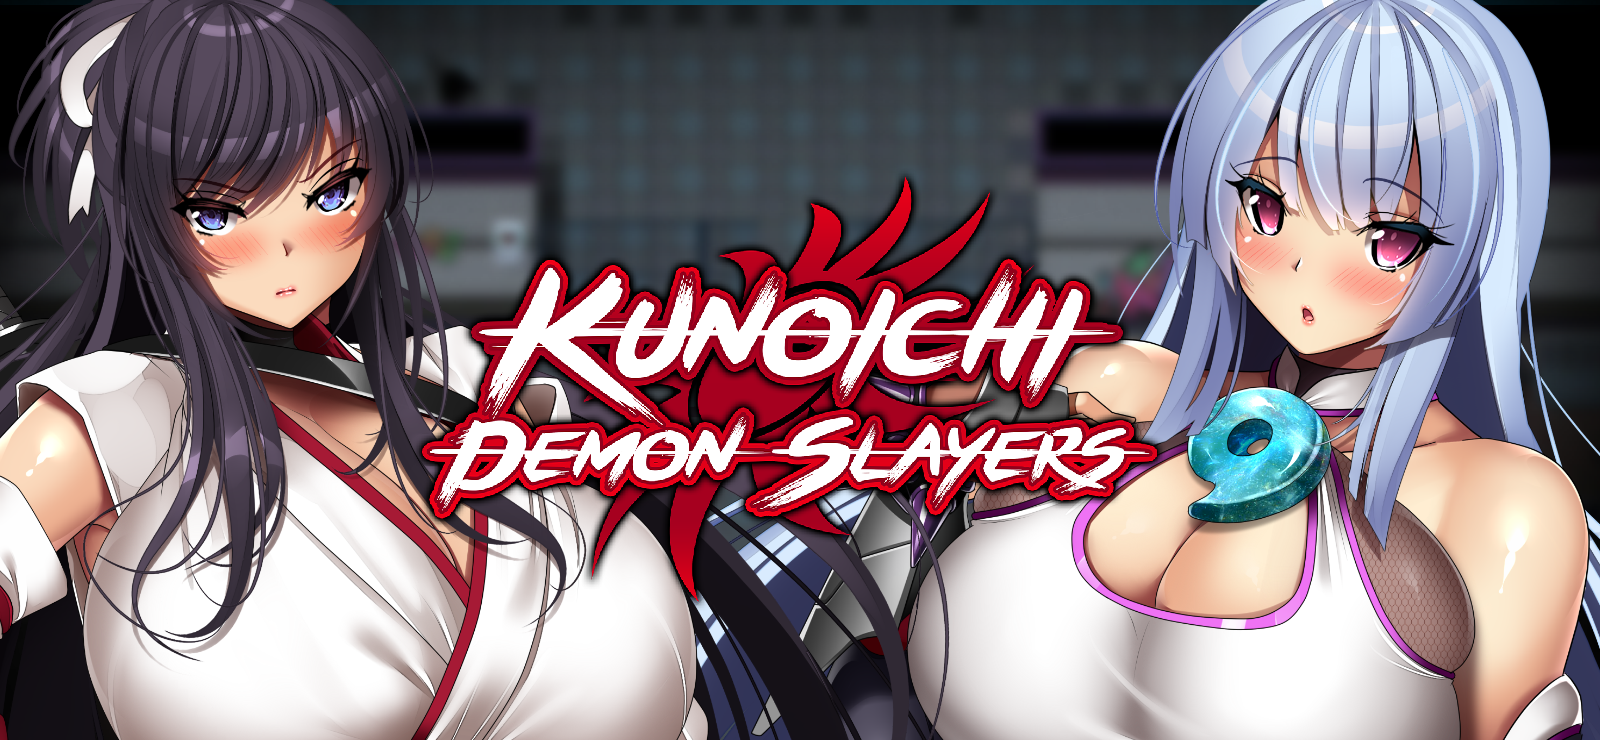 Kunoichi Demon Slayers